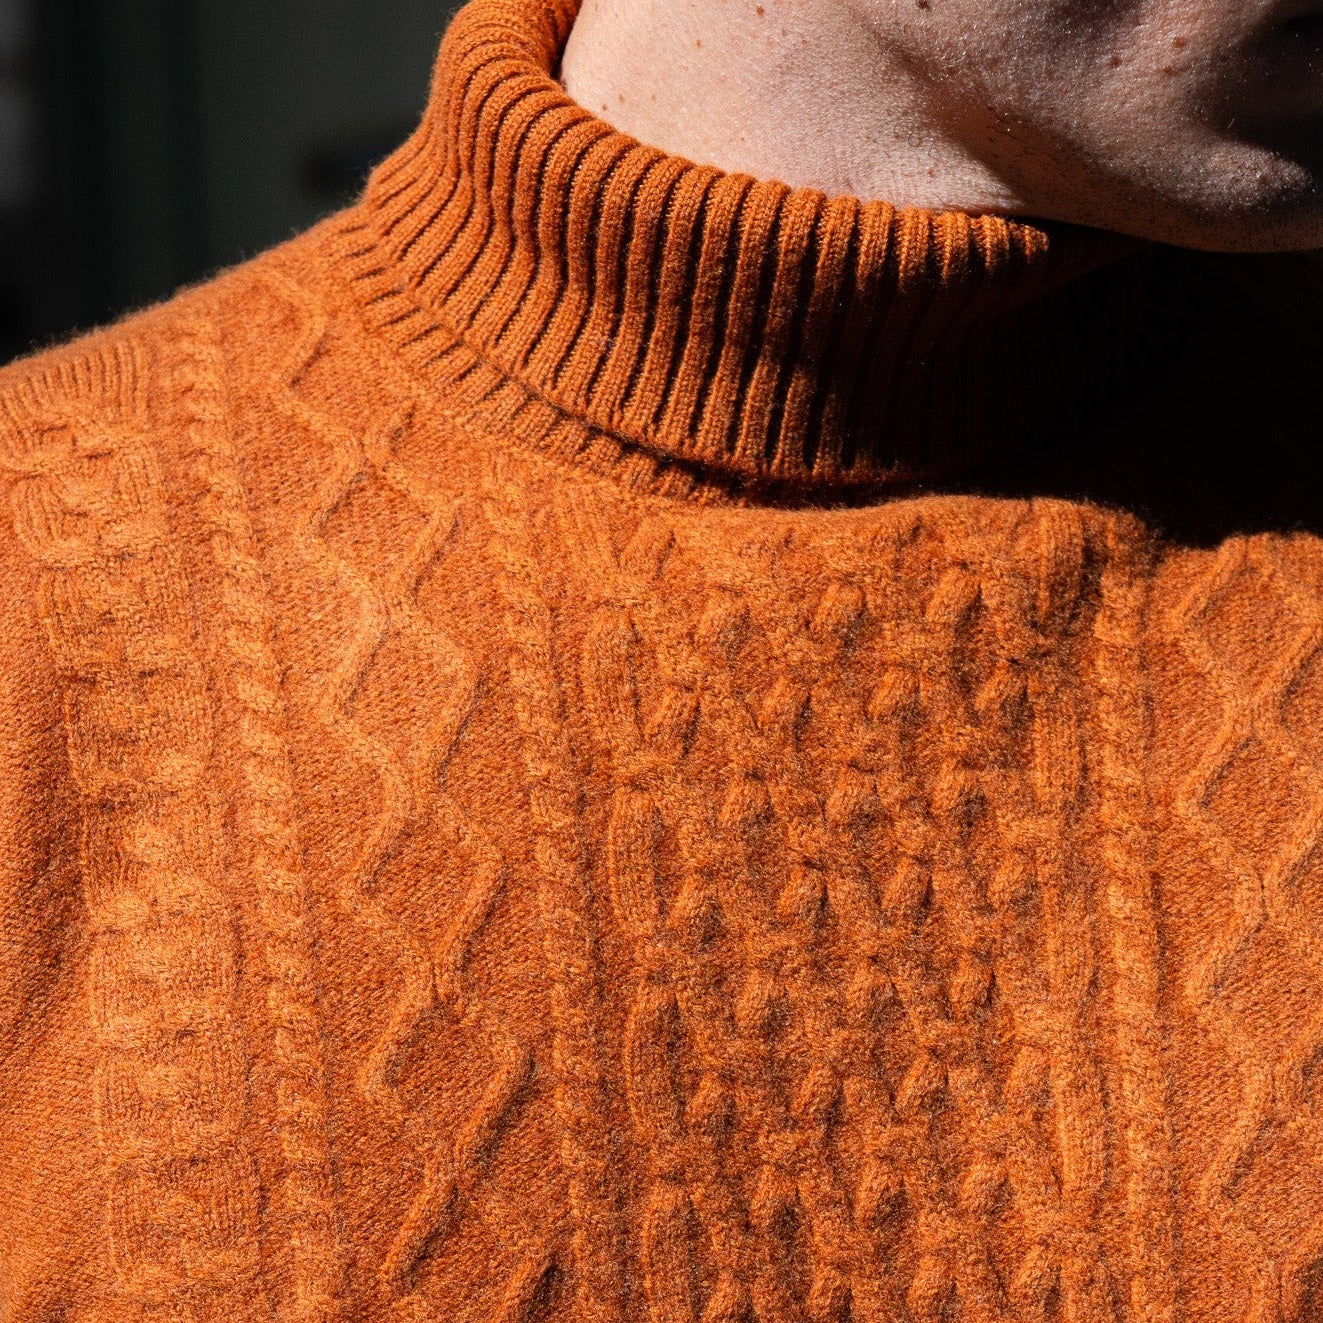 OLD MONEY Merino Wool Knitted Turtleneck Sweater